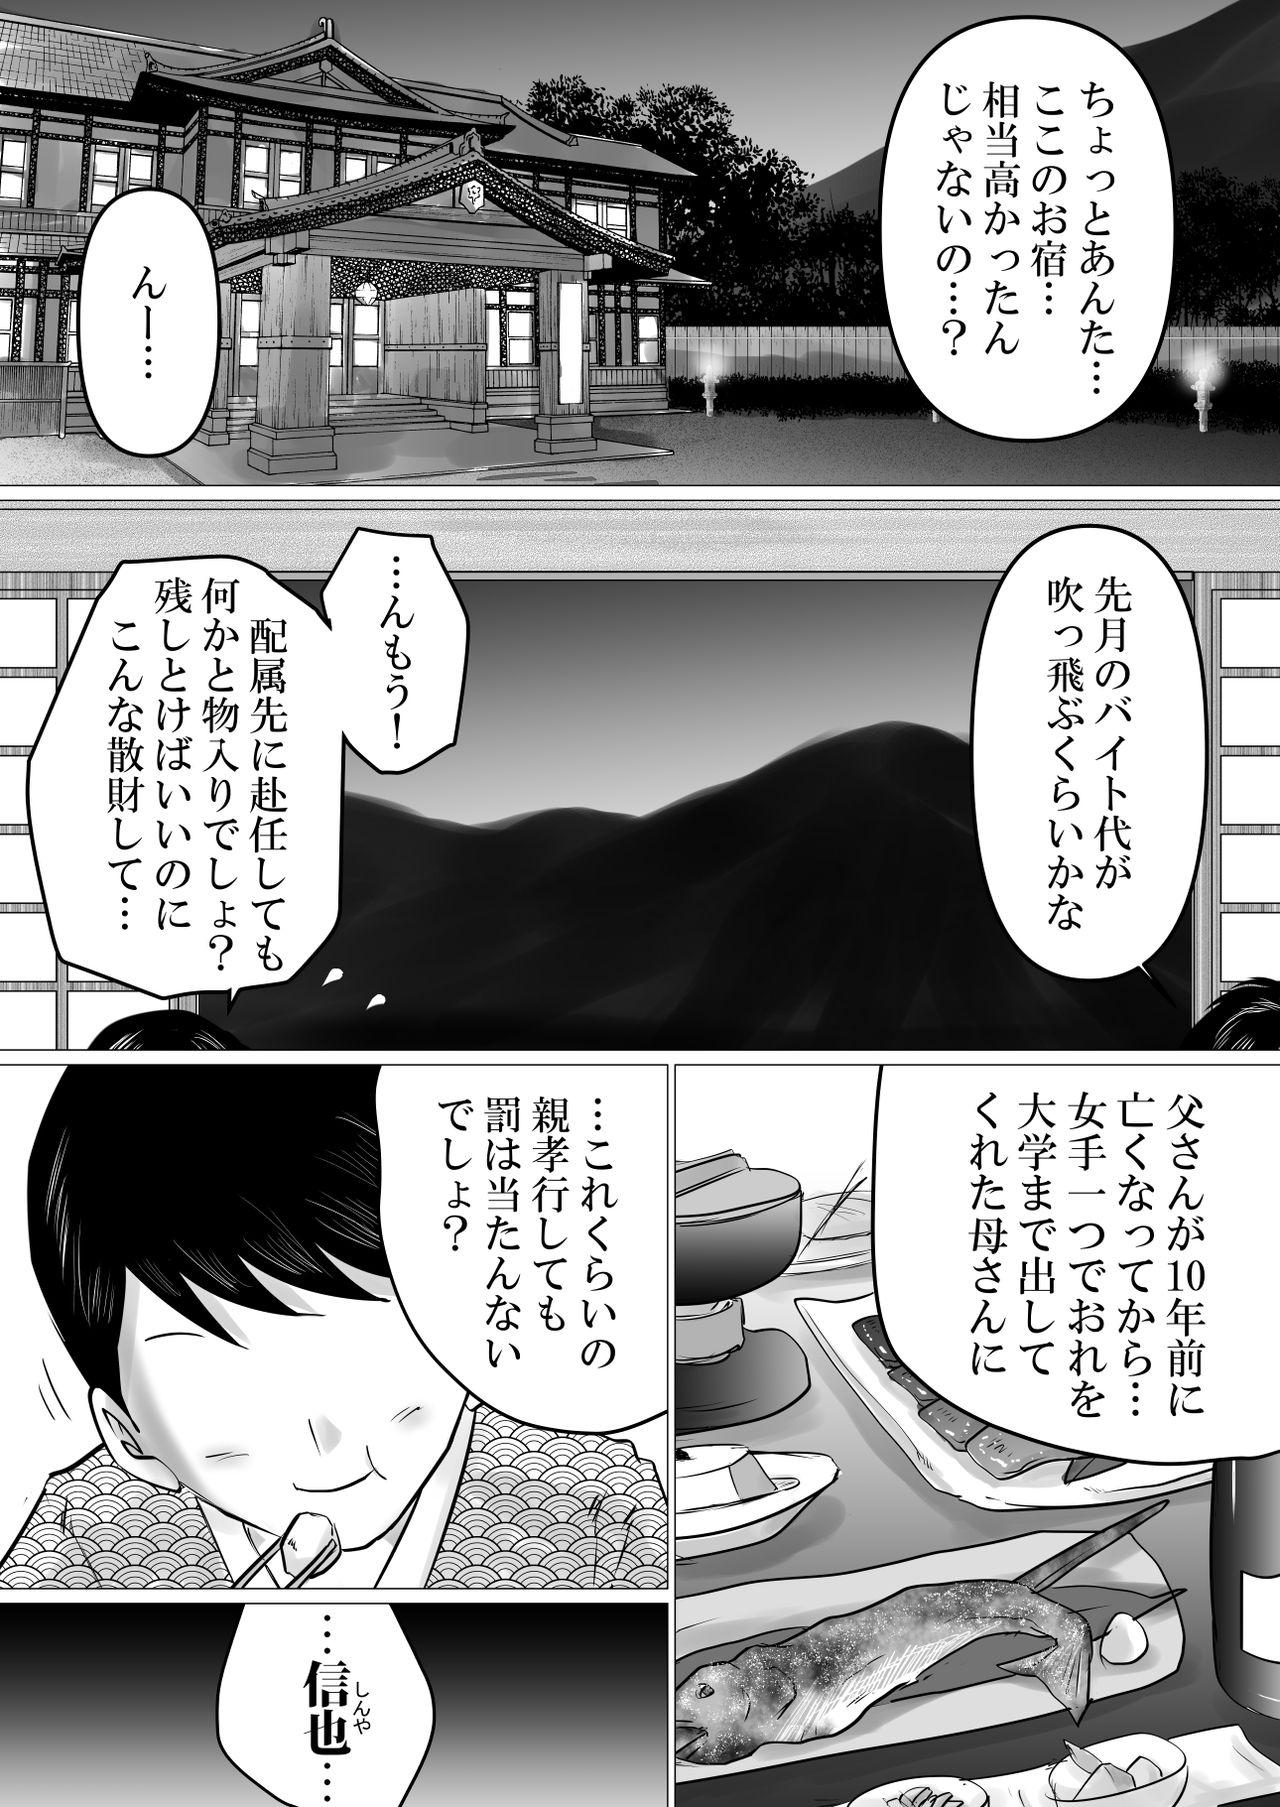 Vagina Jukubo to futari de, onsen ryokō. - Original Publico - Page 2